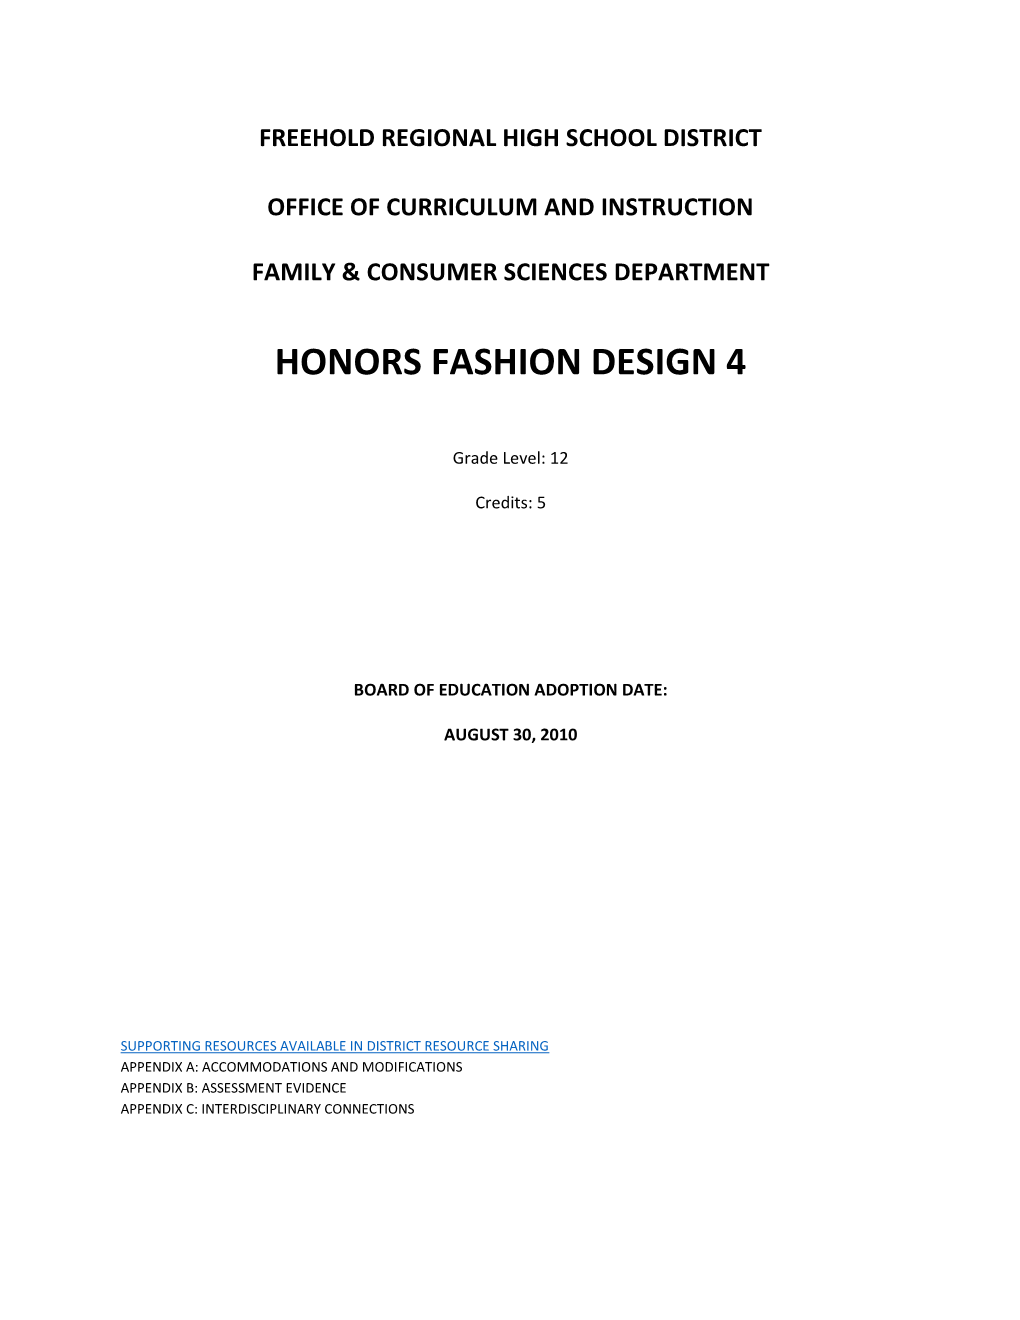 Honors Fashion Design 4